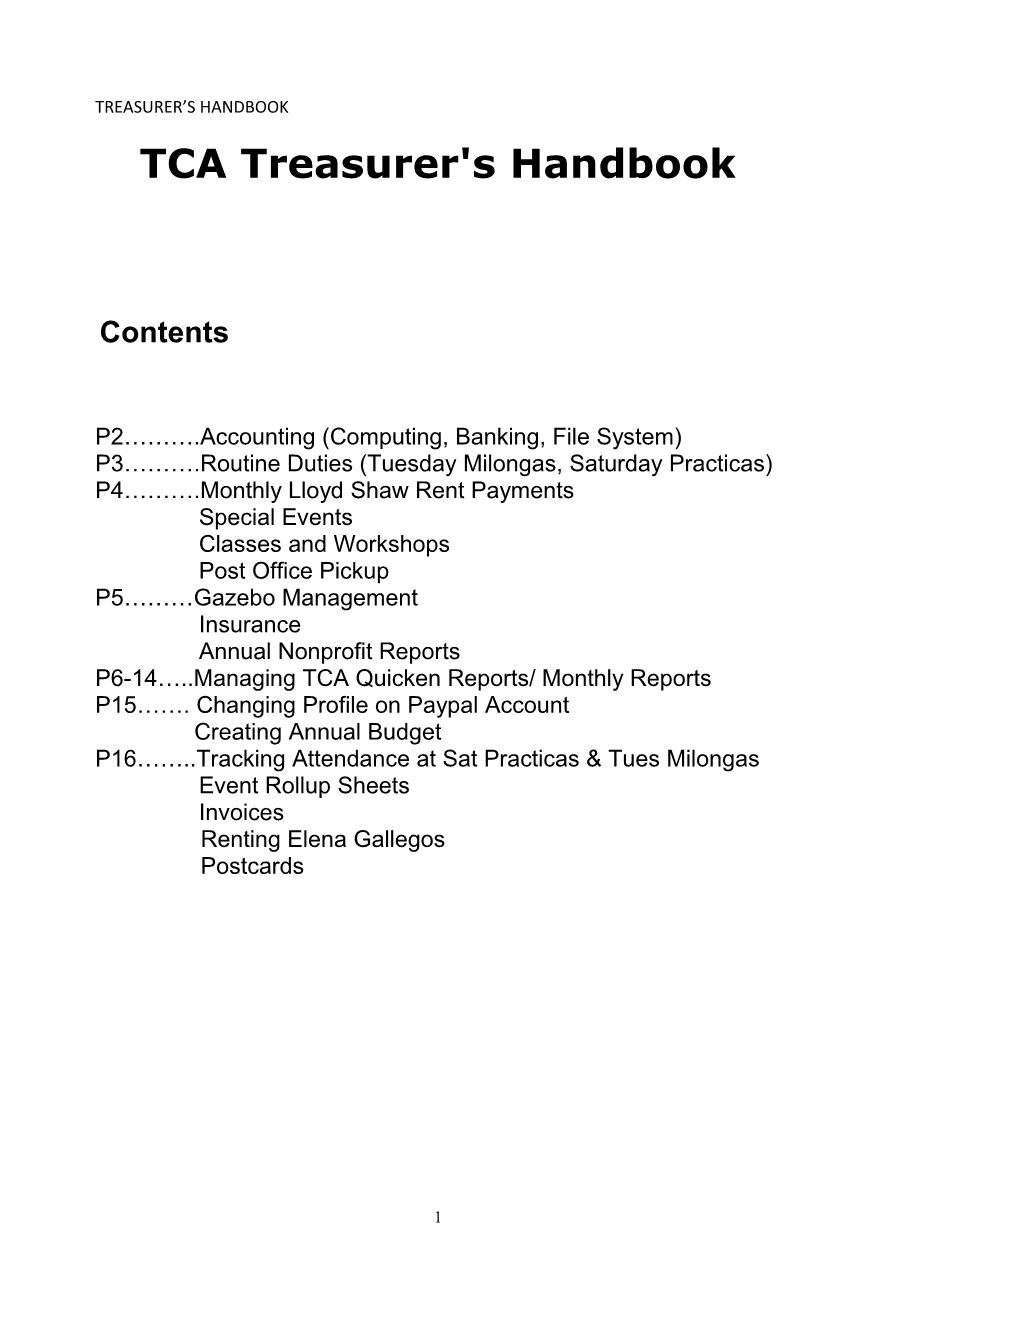 TCA Treasurer's Handbook